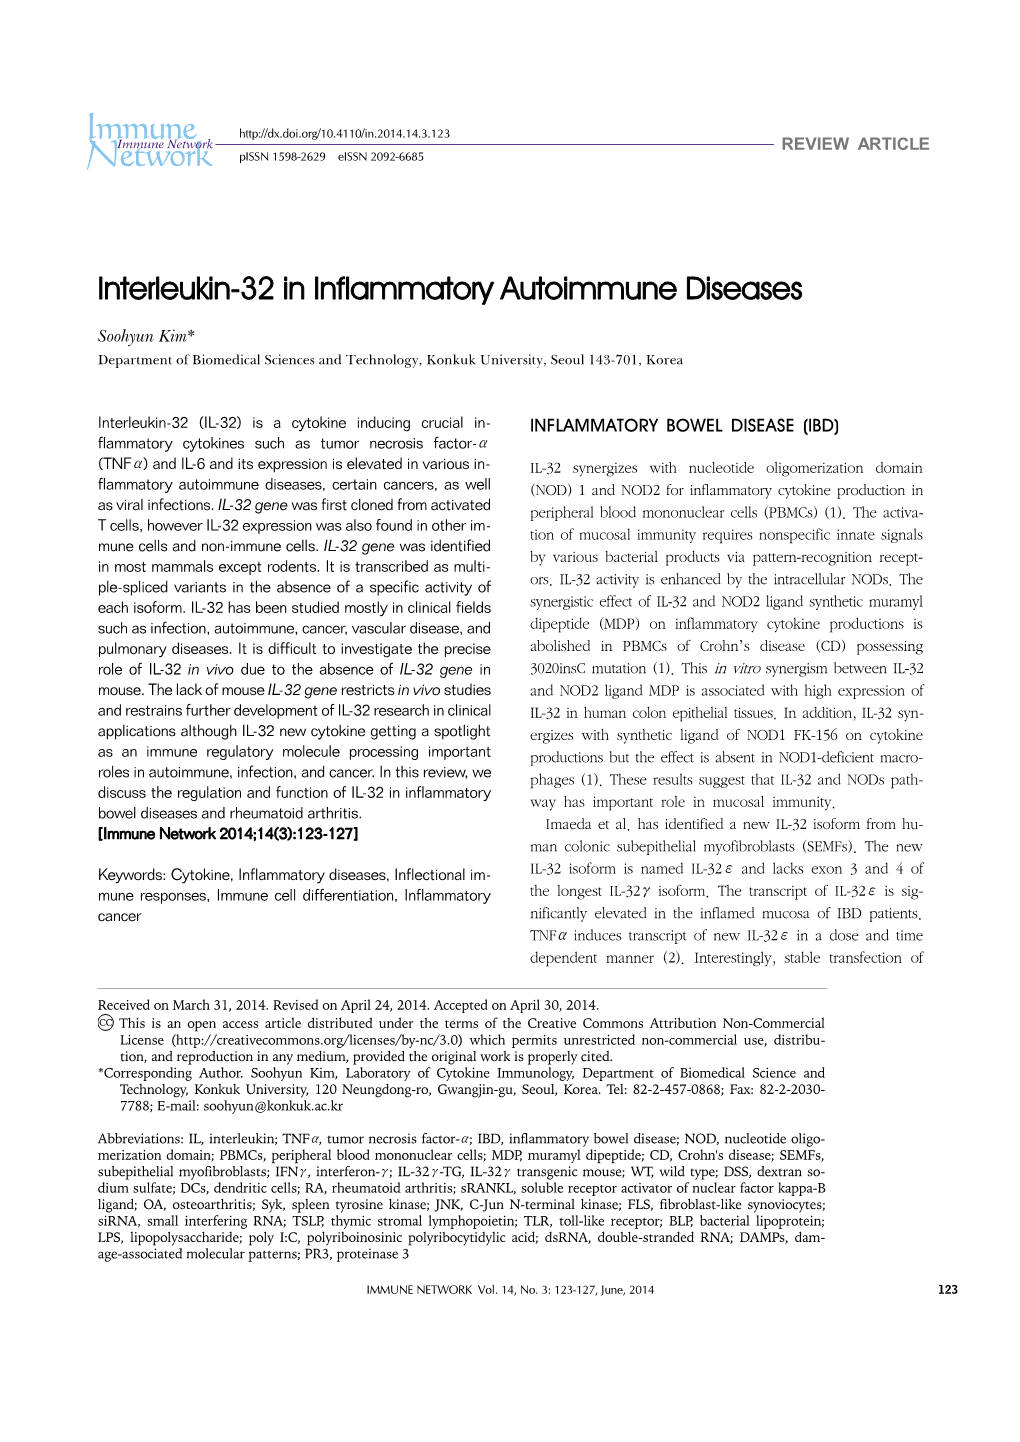 Interleukin-32 in Inflammatory Autoimmune Diseases